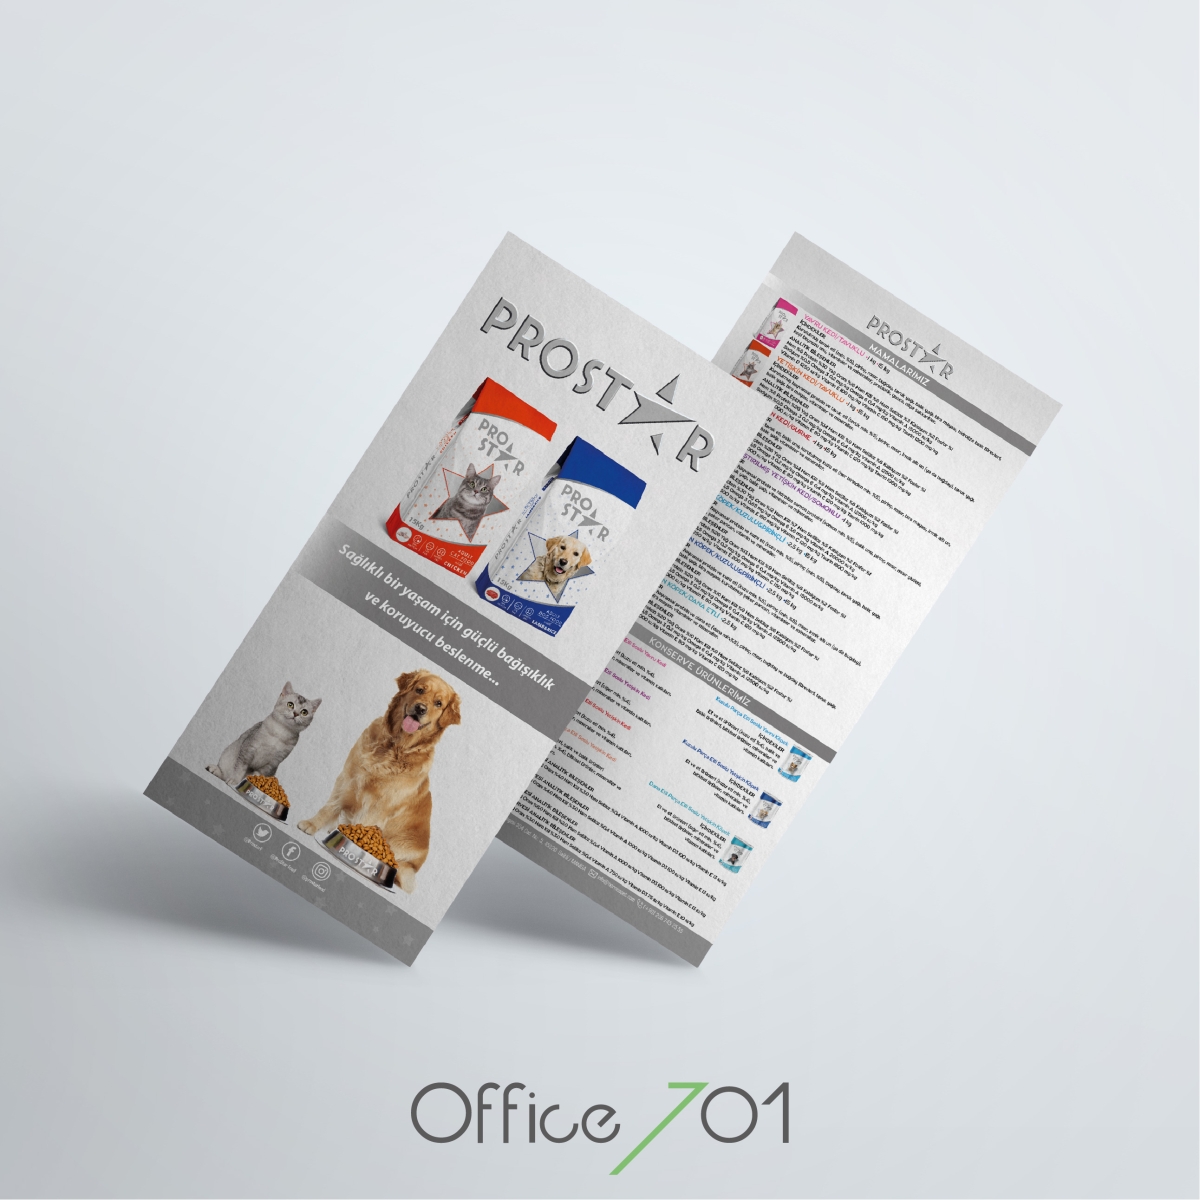 Office701 | Prostar | Brochure Design